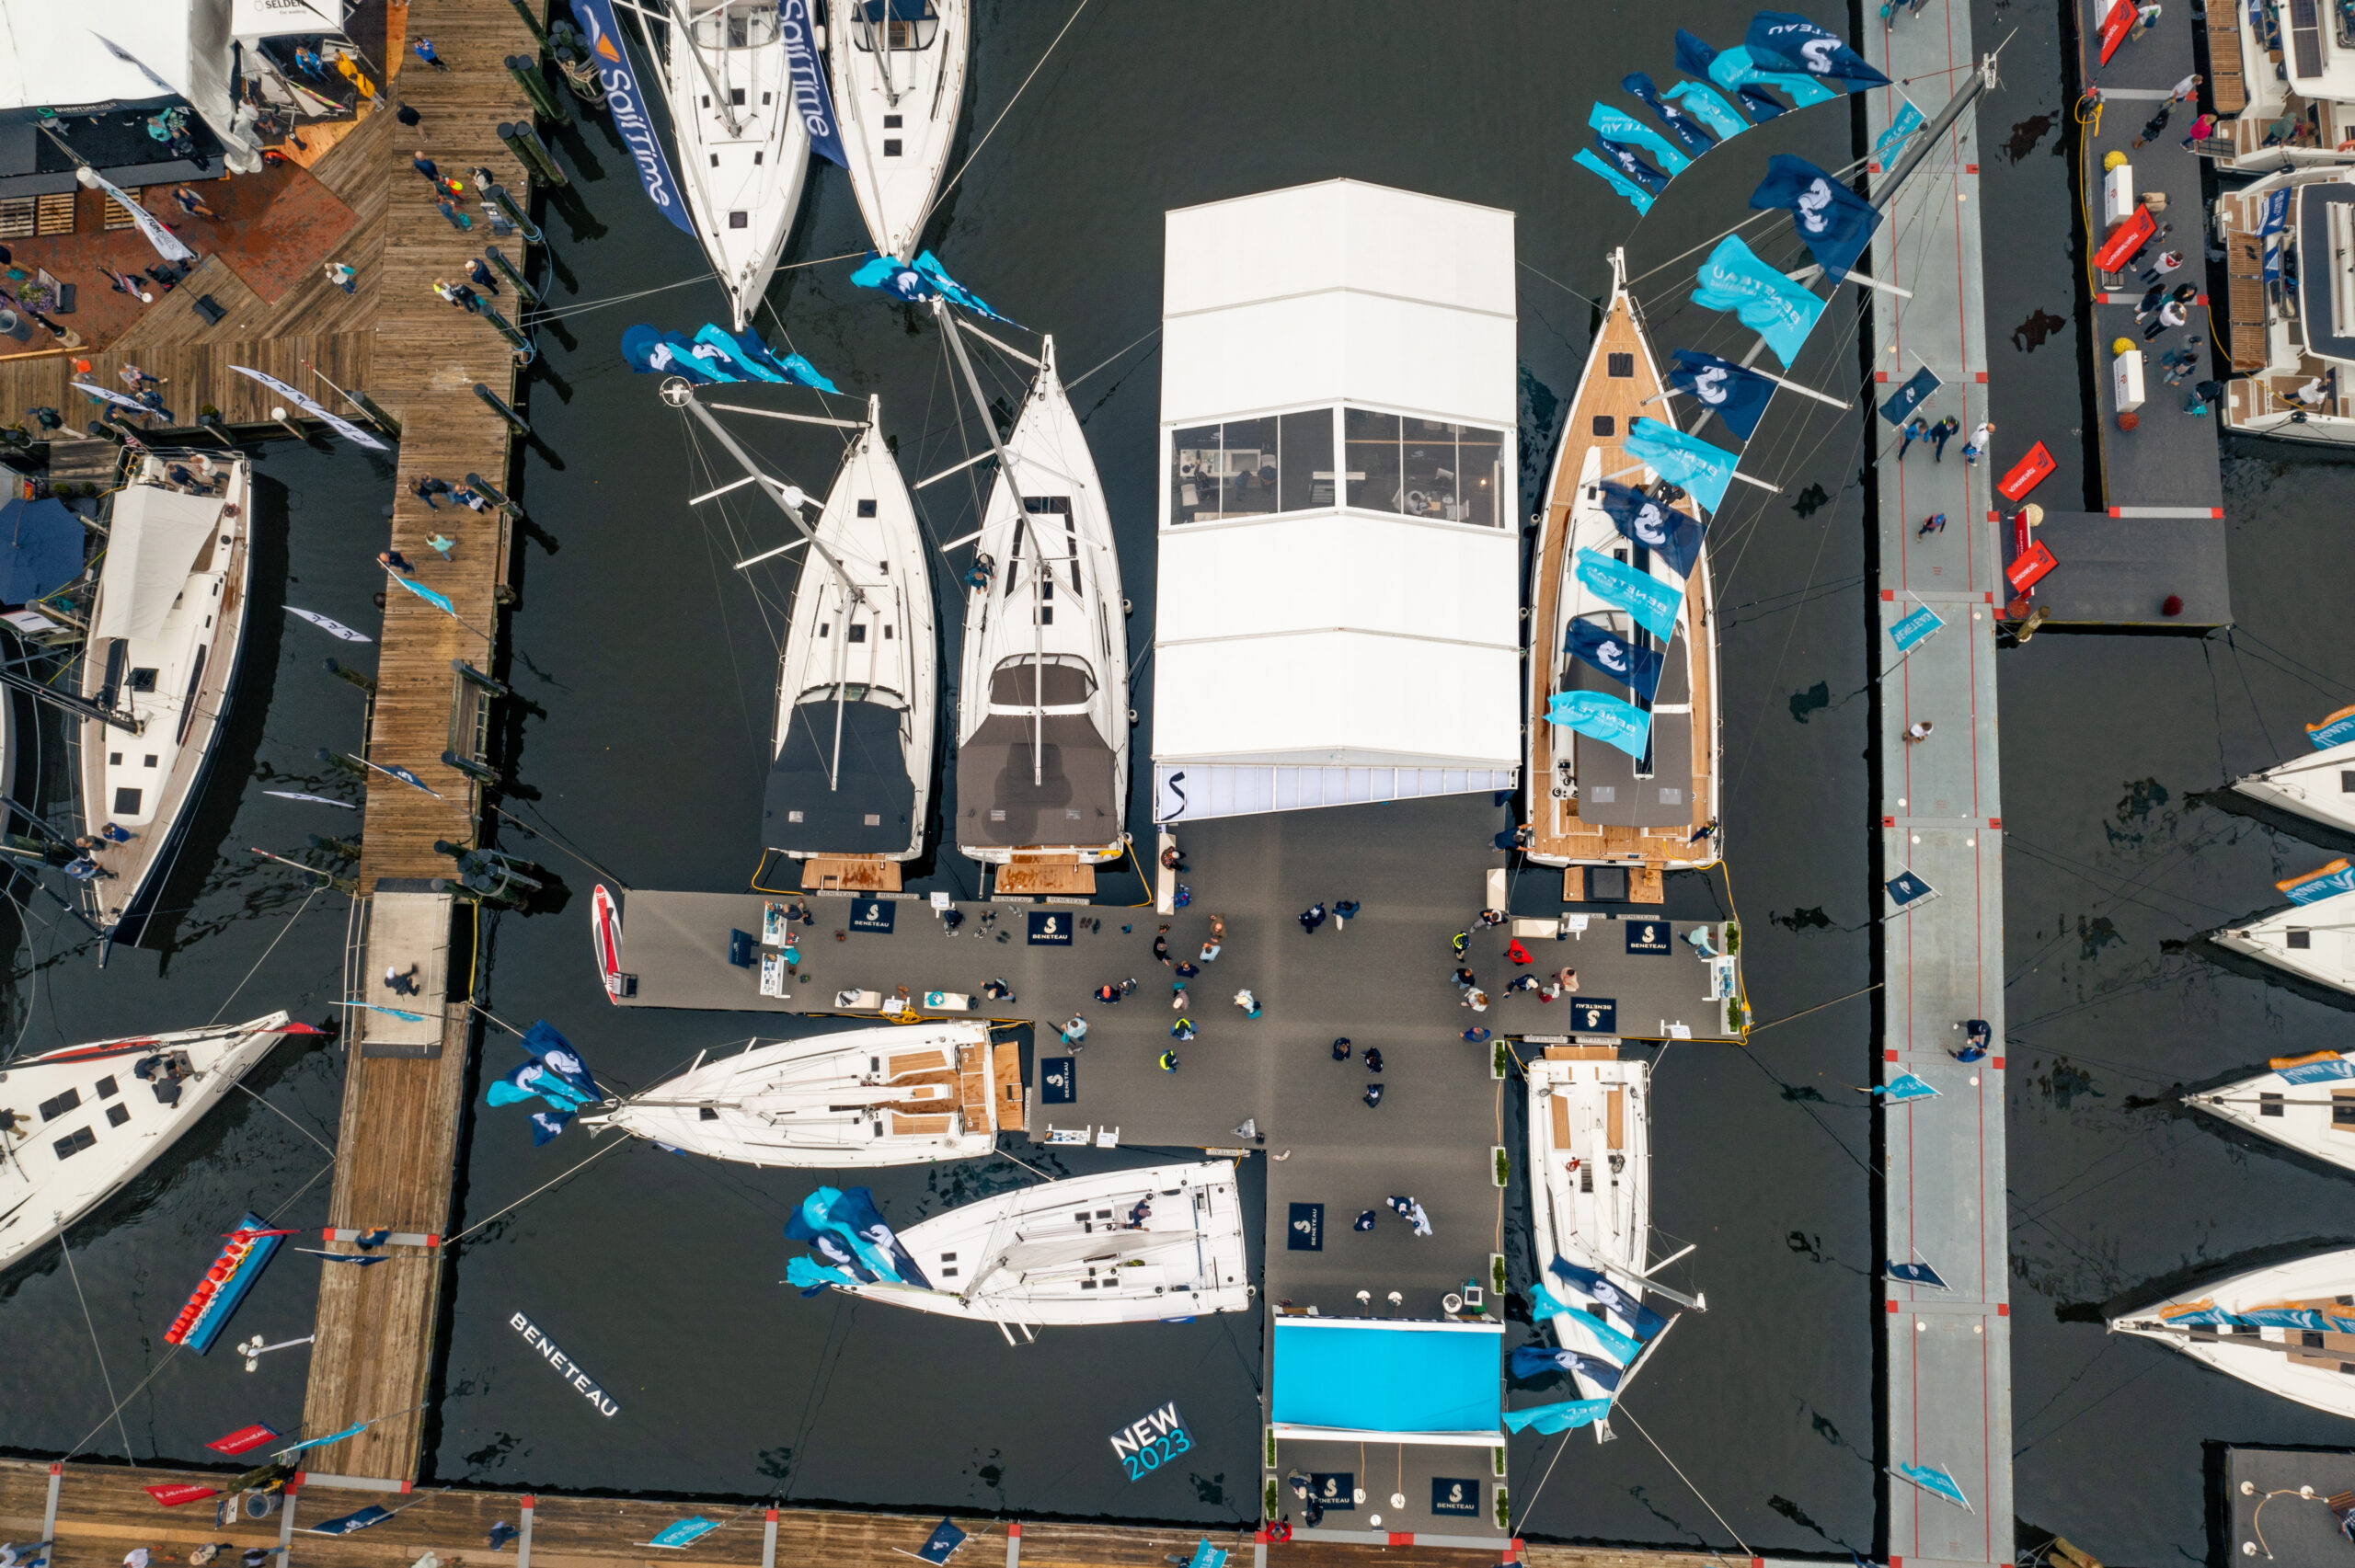 annapolis sailboat show spring 2023